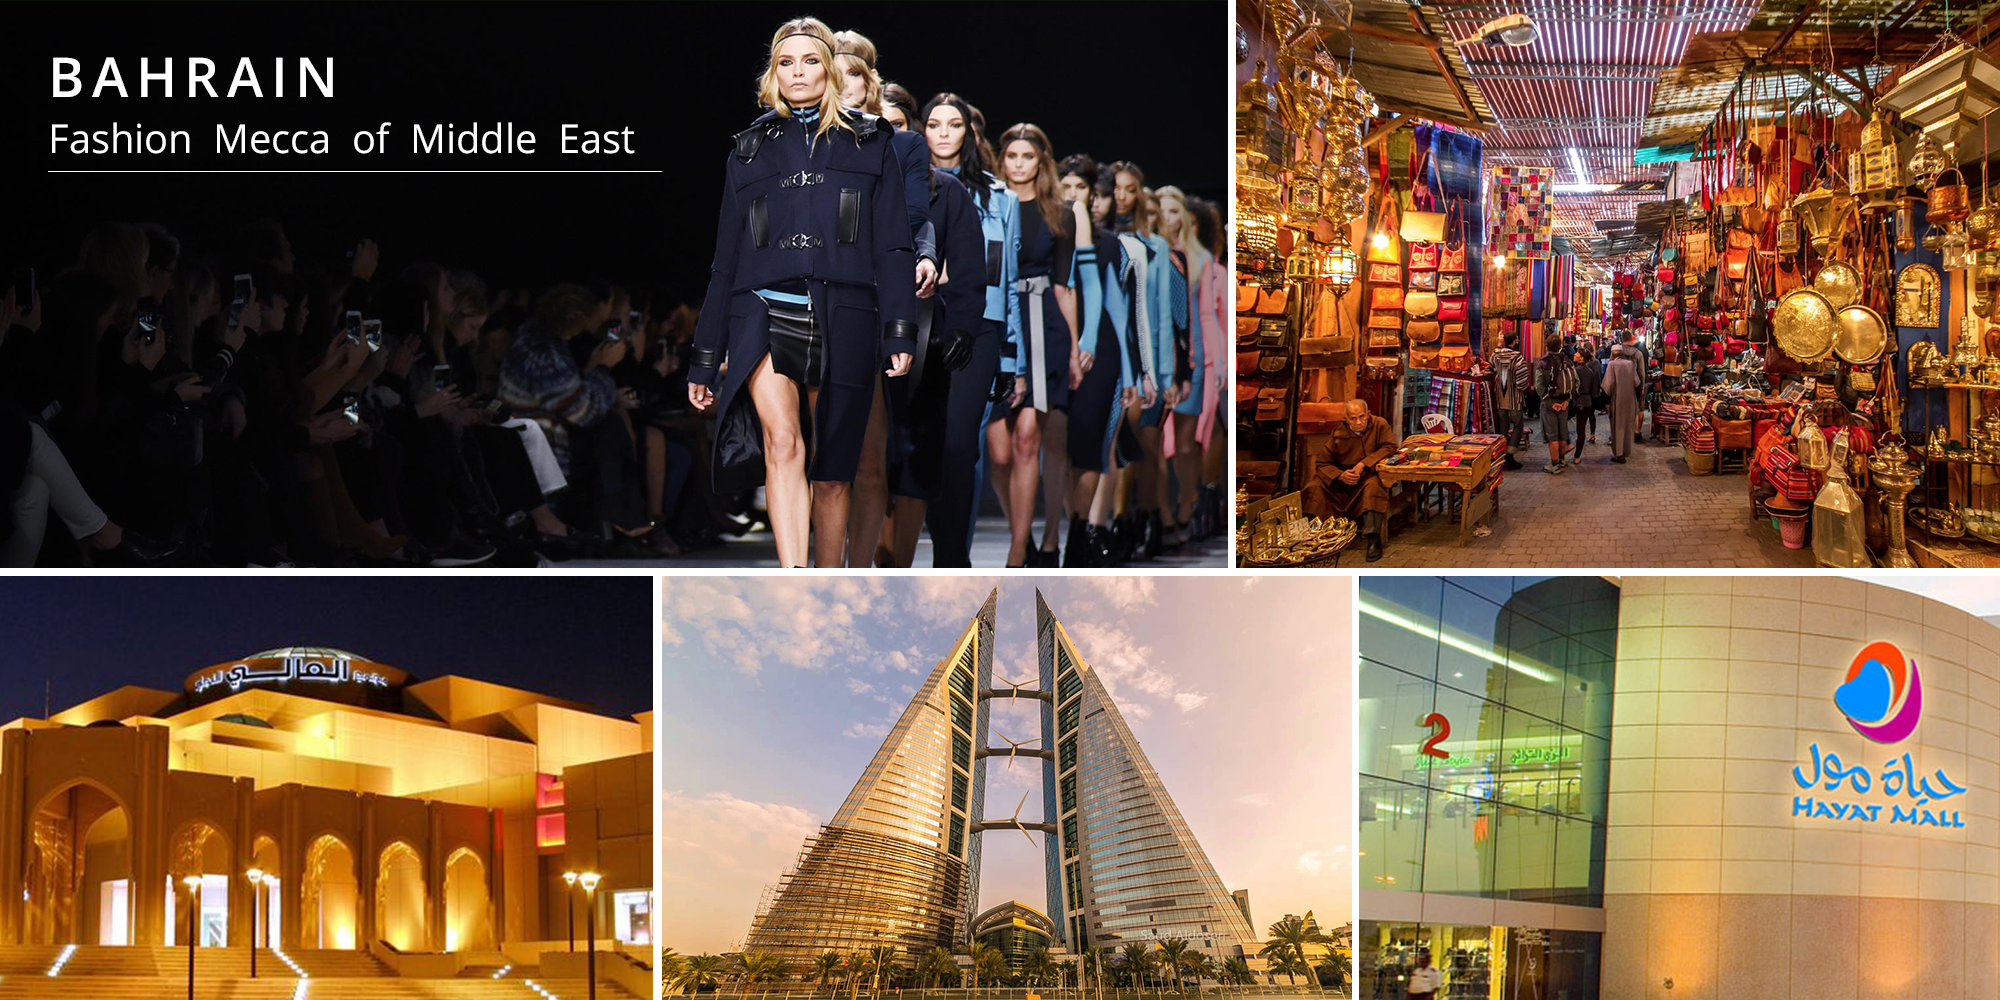 Bahrain – Fashion Mecca of Middle East